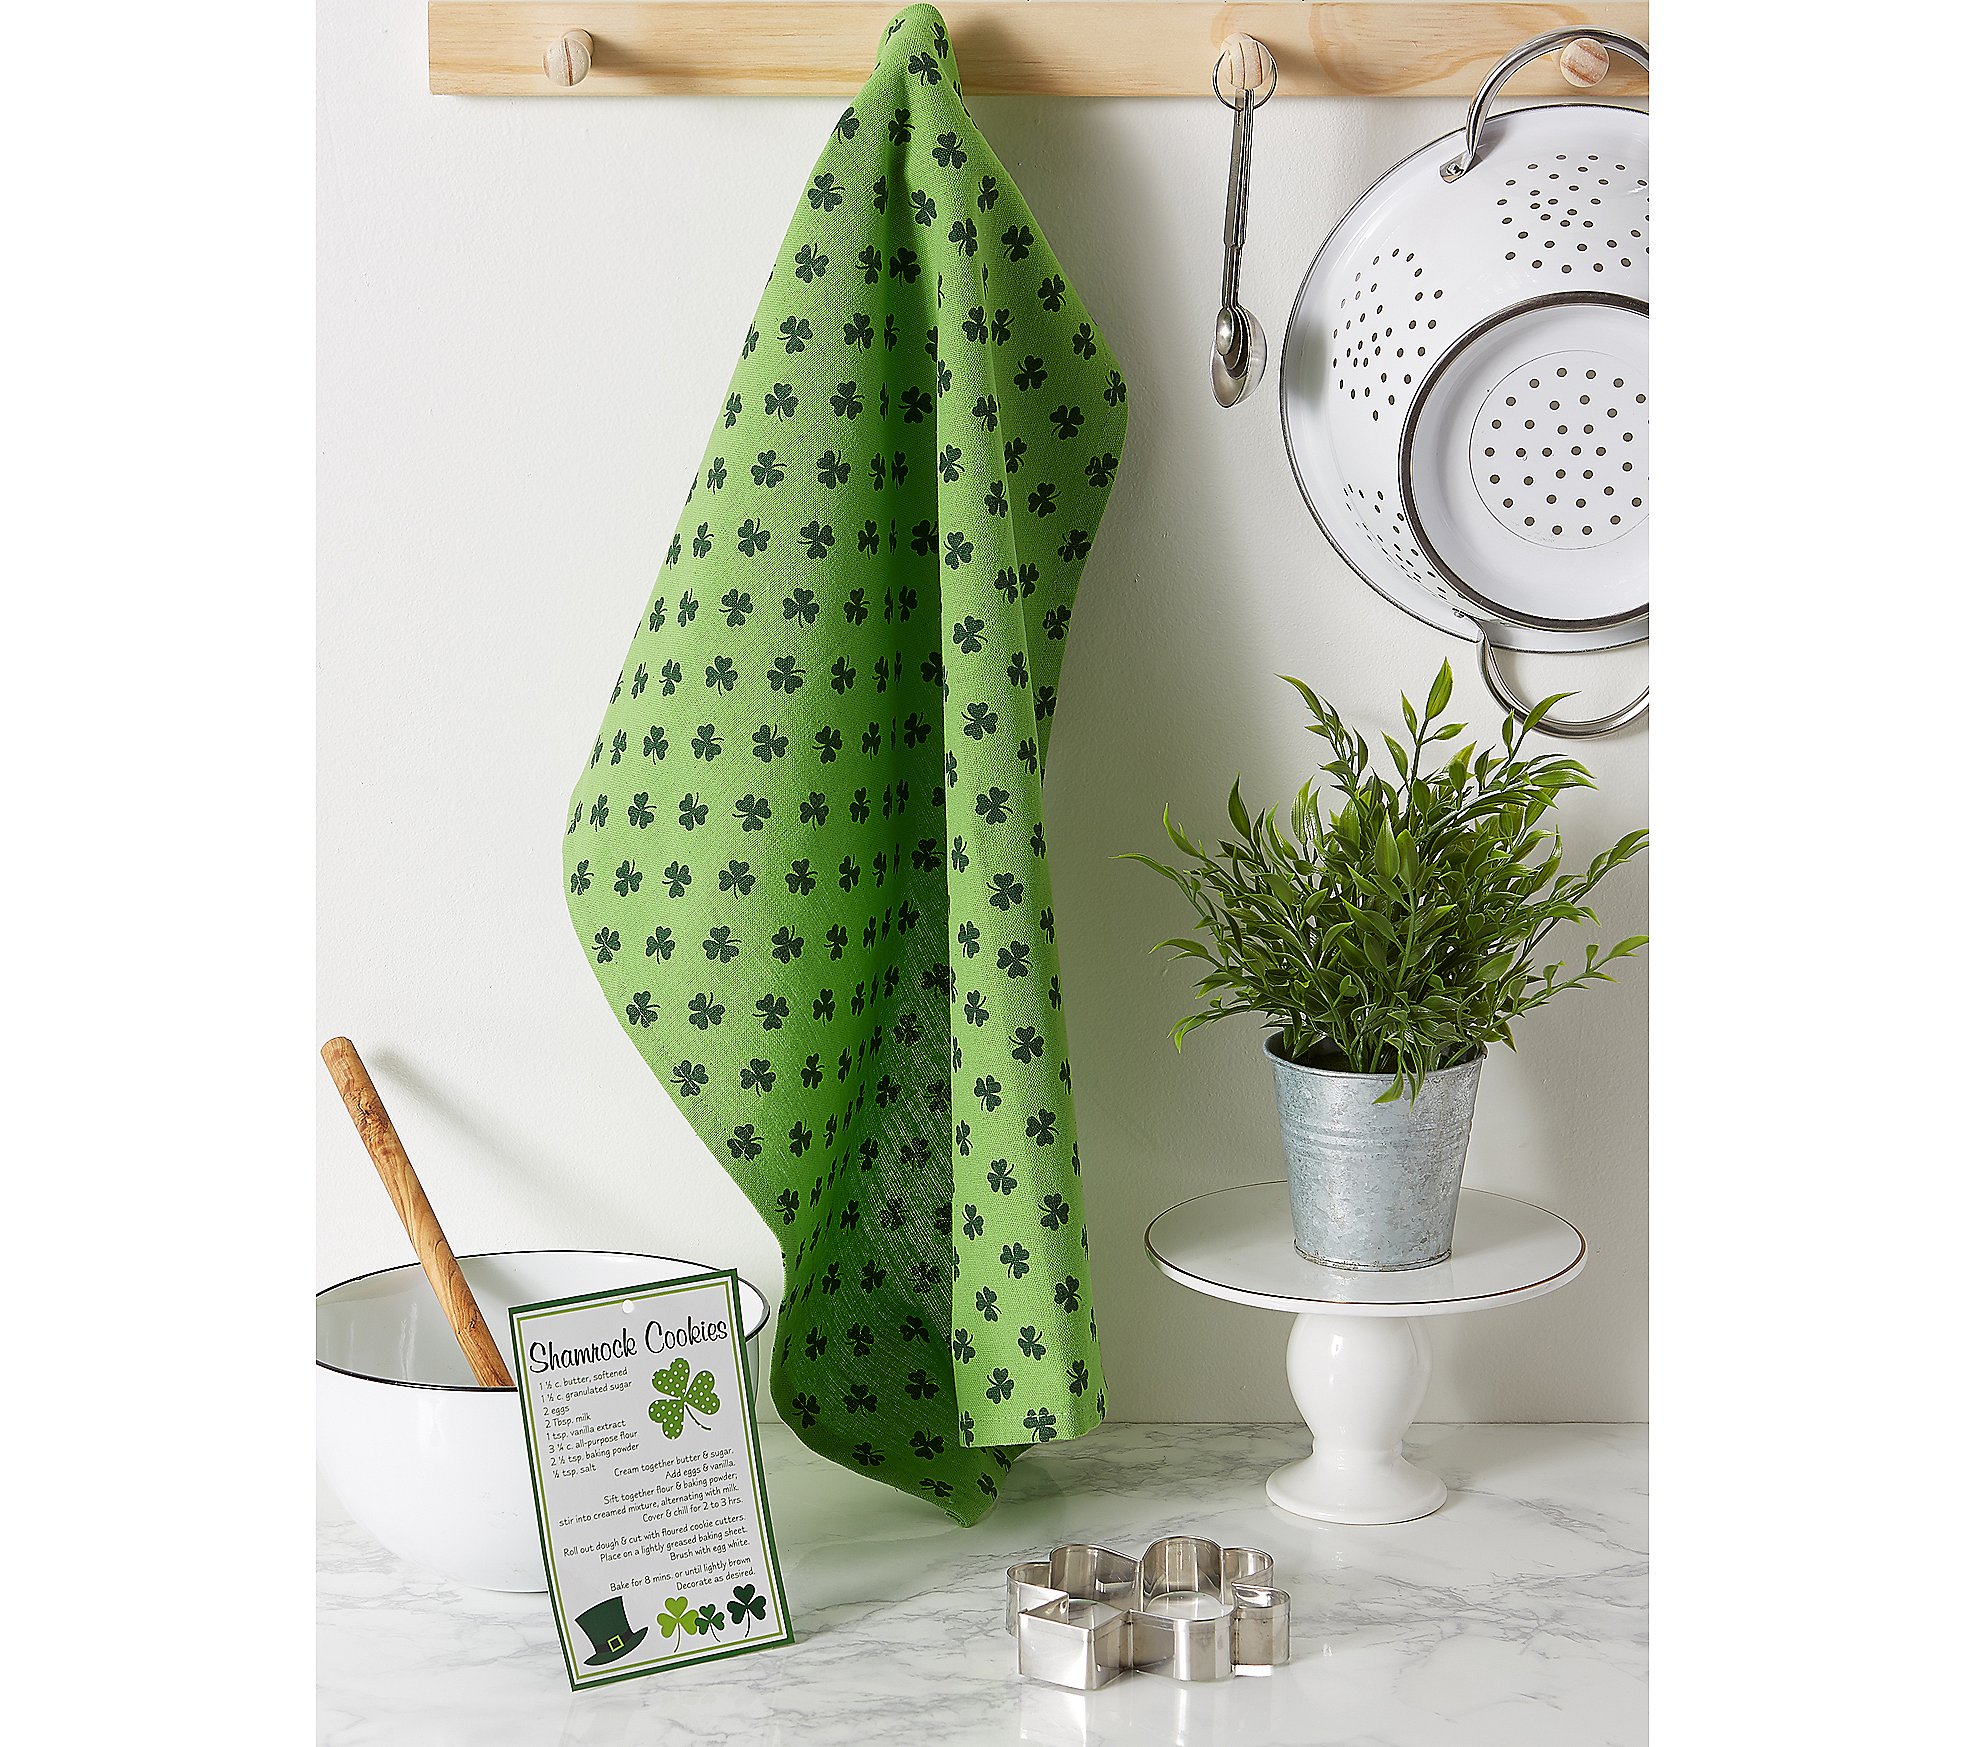 Design Imports Shamrock Kitchen Towel Cookie Cutter Gift Set